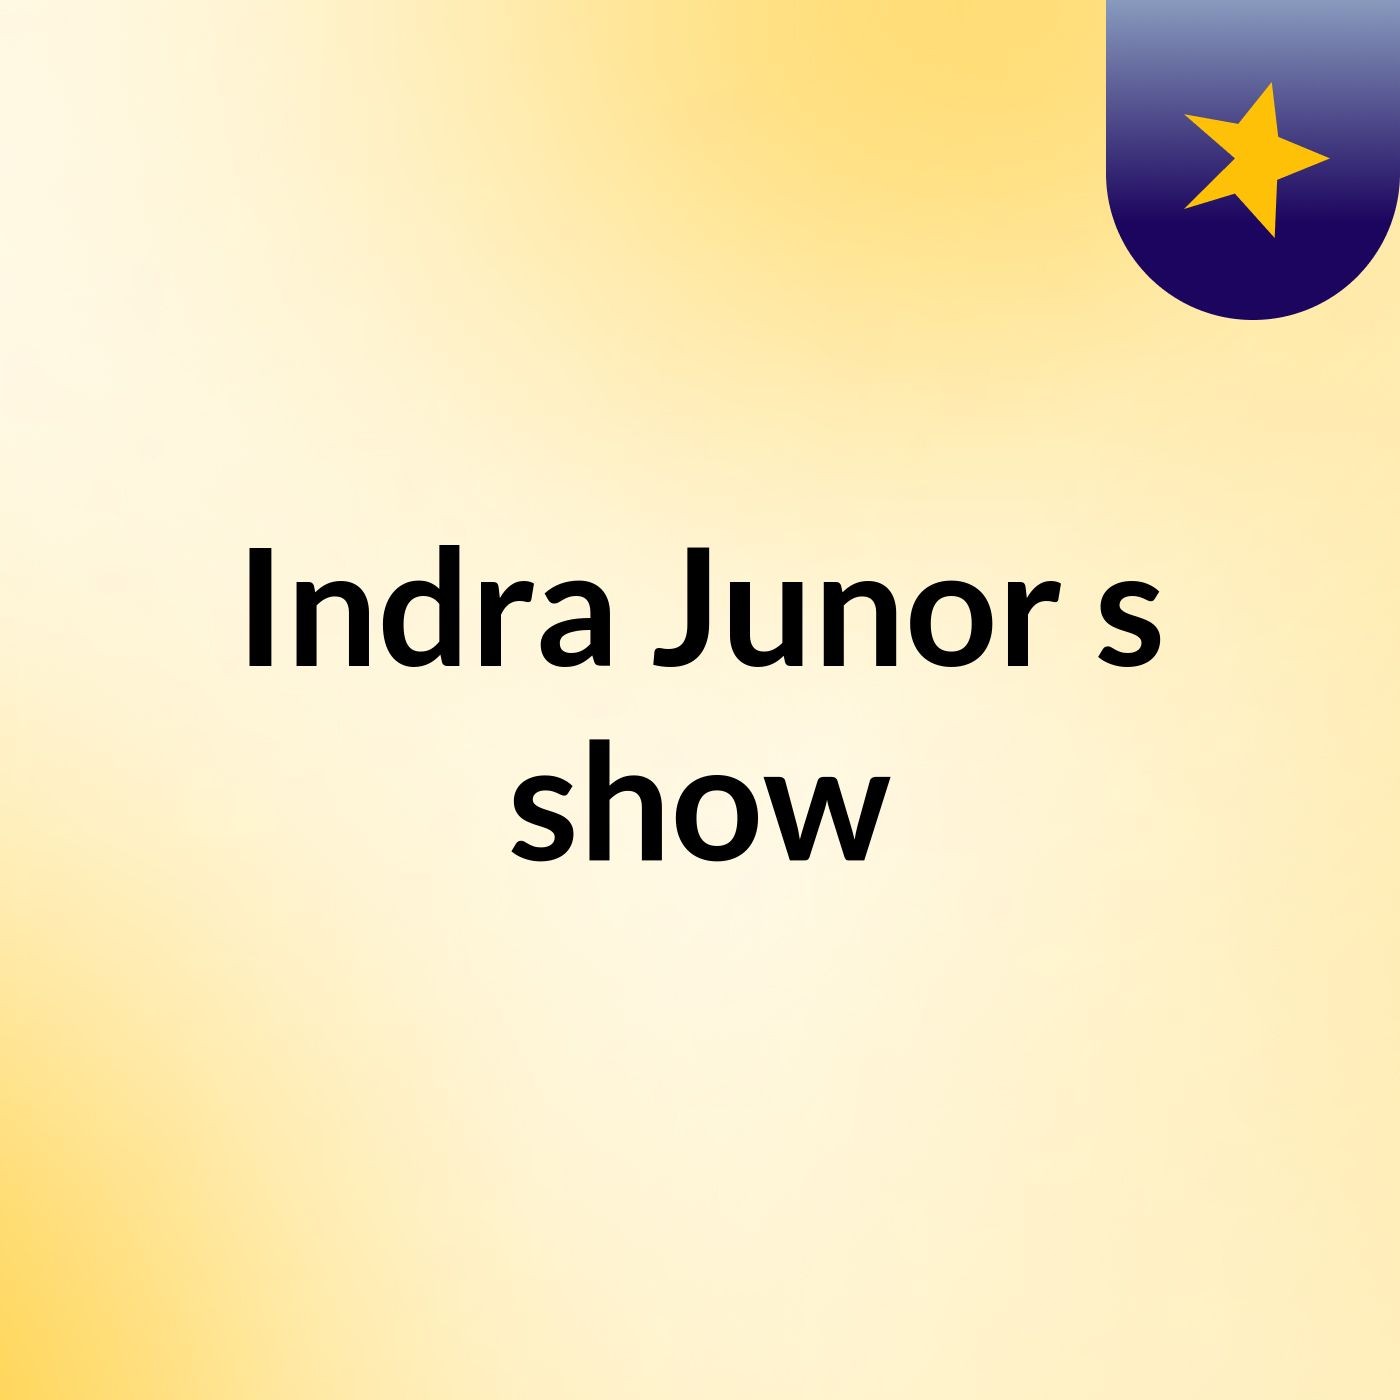 Indra Junor's show